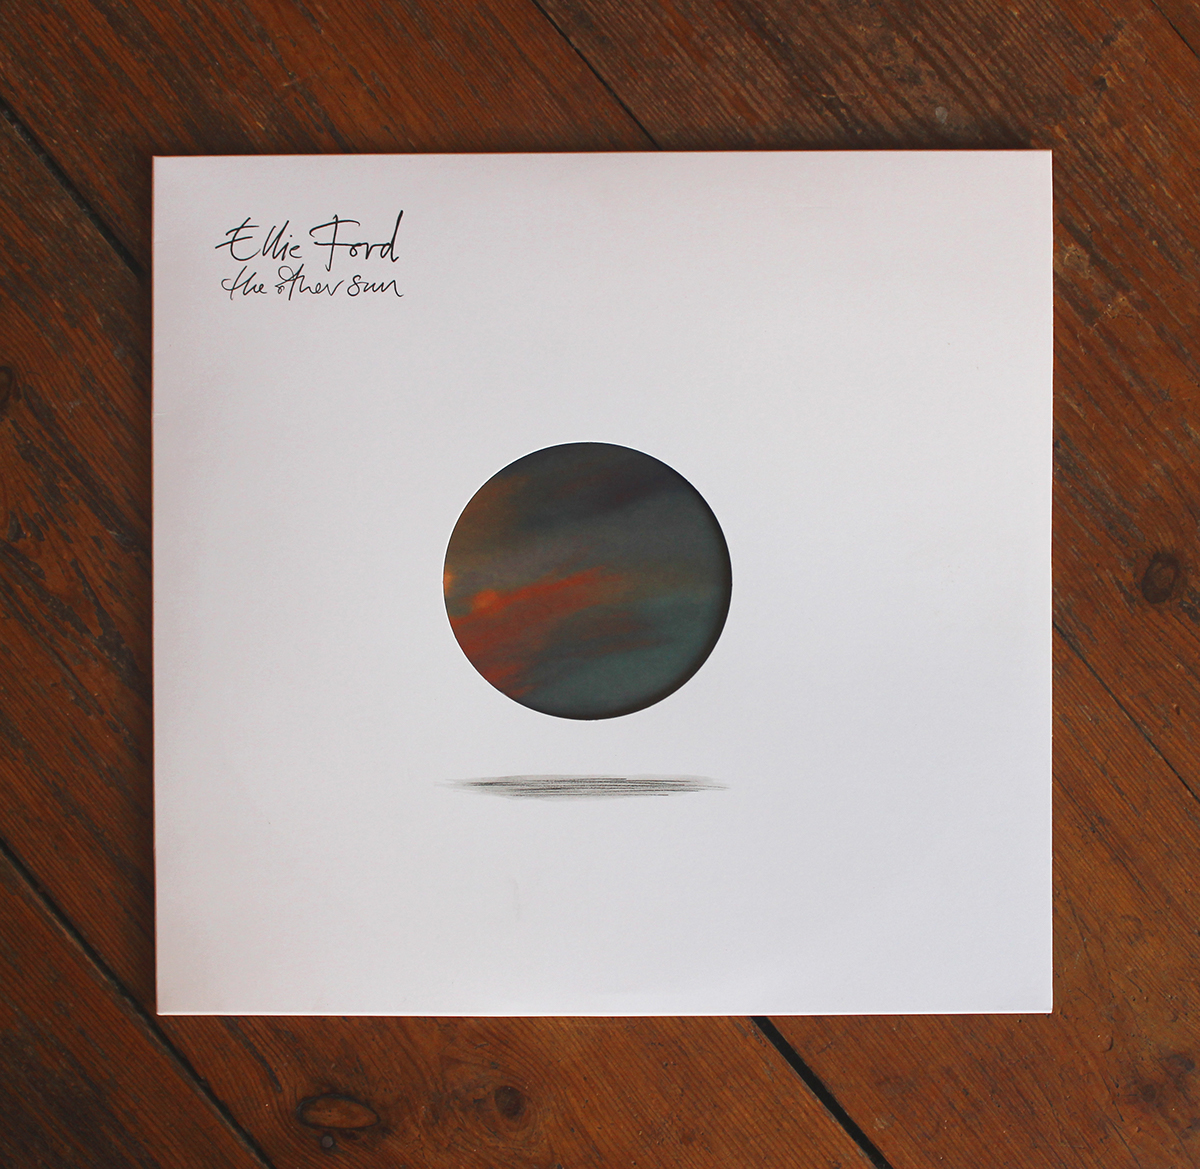 Owen Gent ILLUSTRATION  Ellie Ford The Other Sun album artwork vinyl